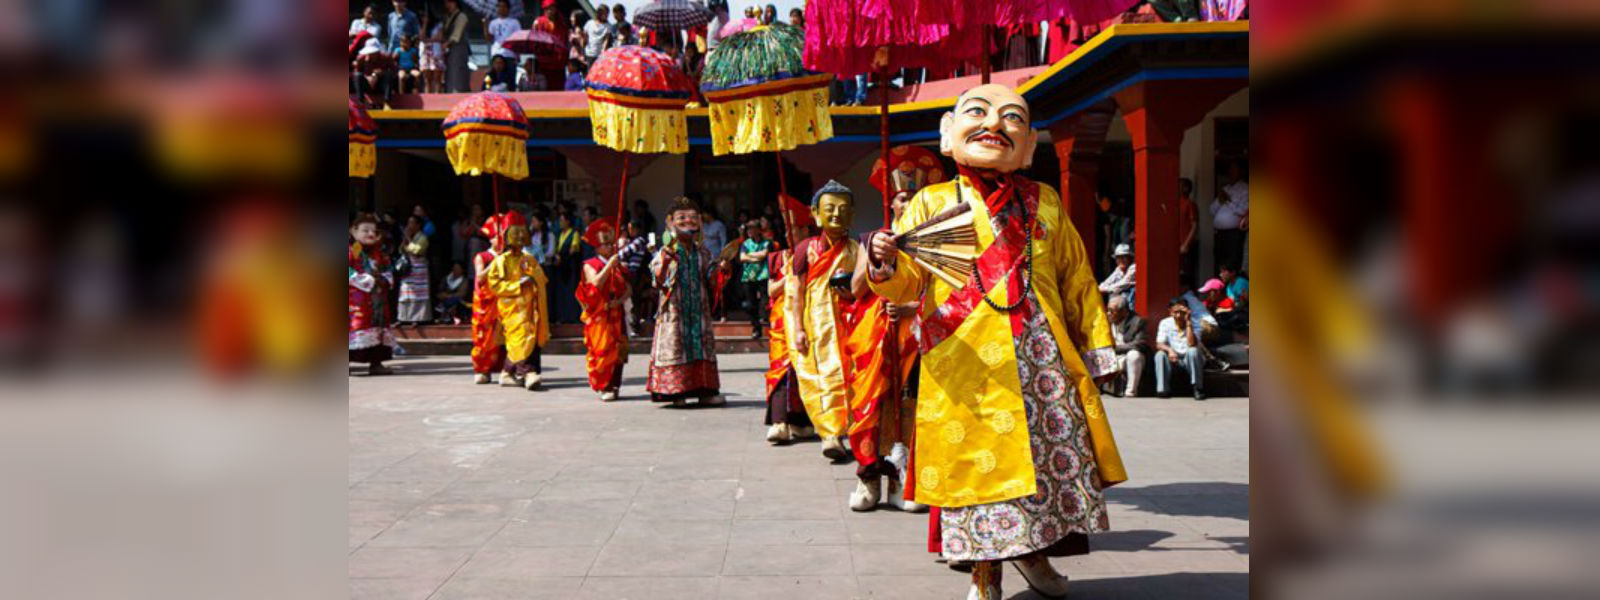 Exiled Tibetans celebrate ‘Saka Dawa’ festival in northern India